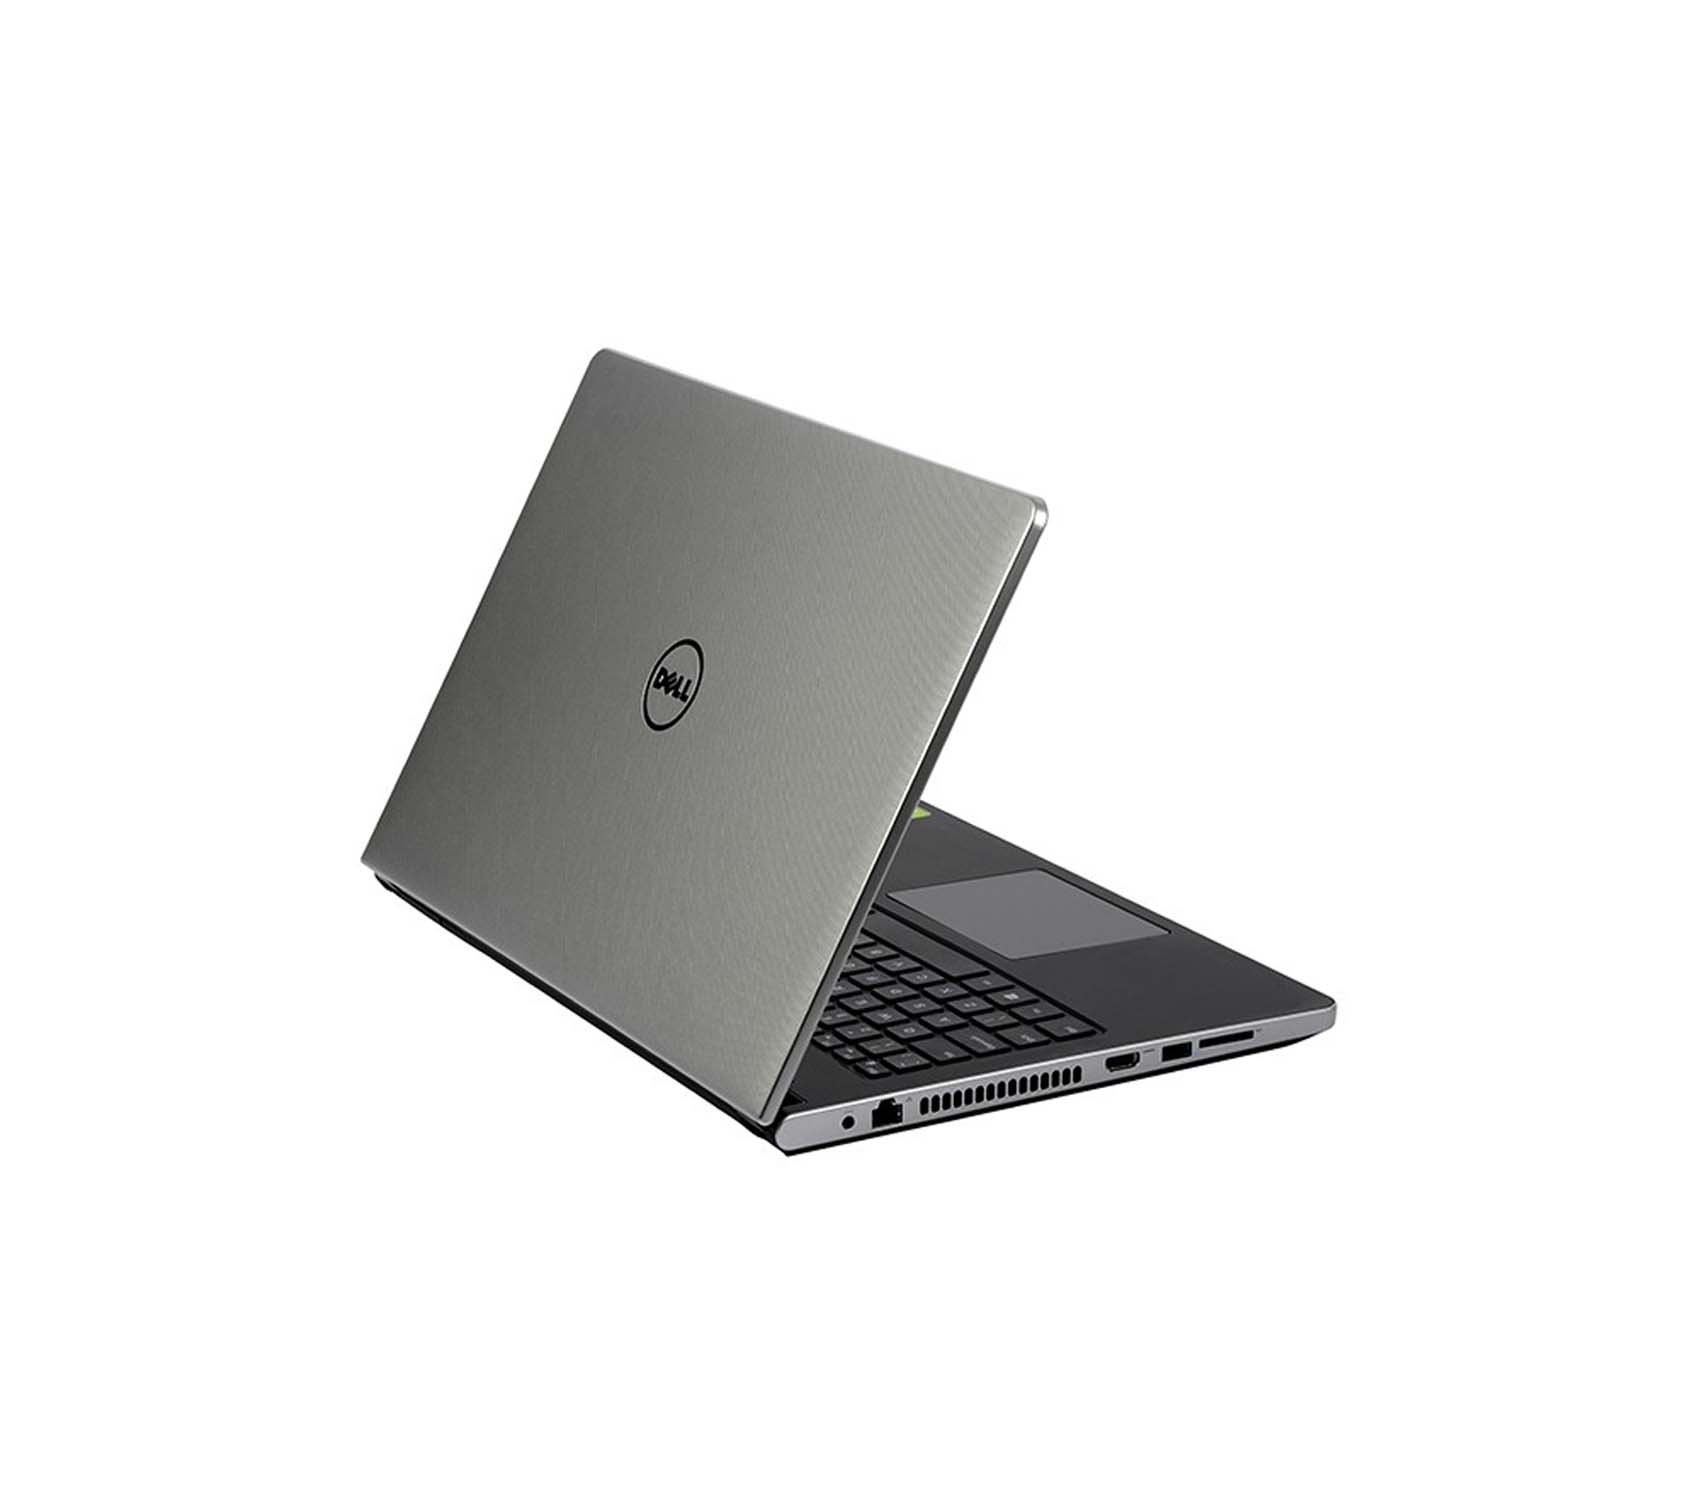 Harga Jual Laptop Dell Inspiron 15 3000 series-3576